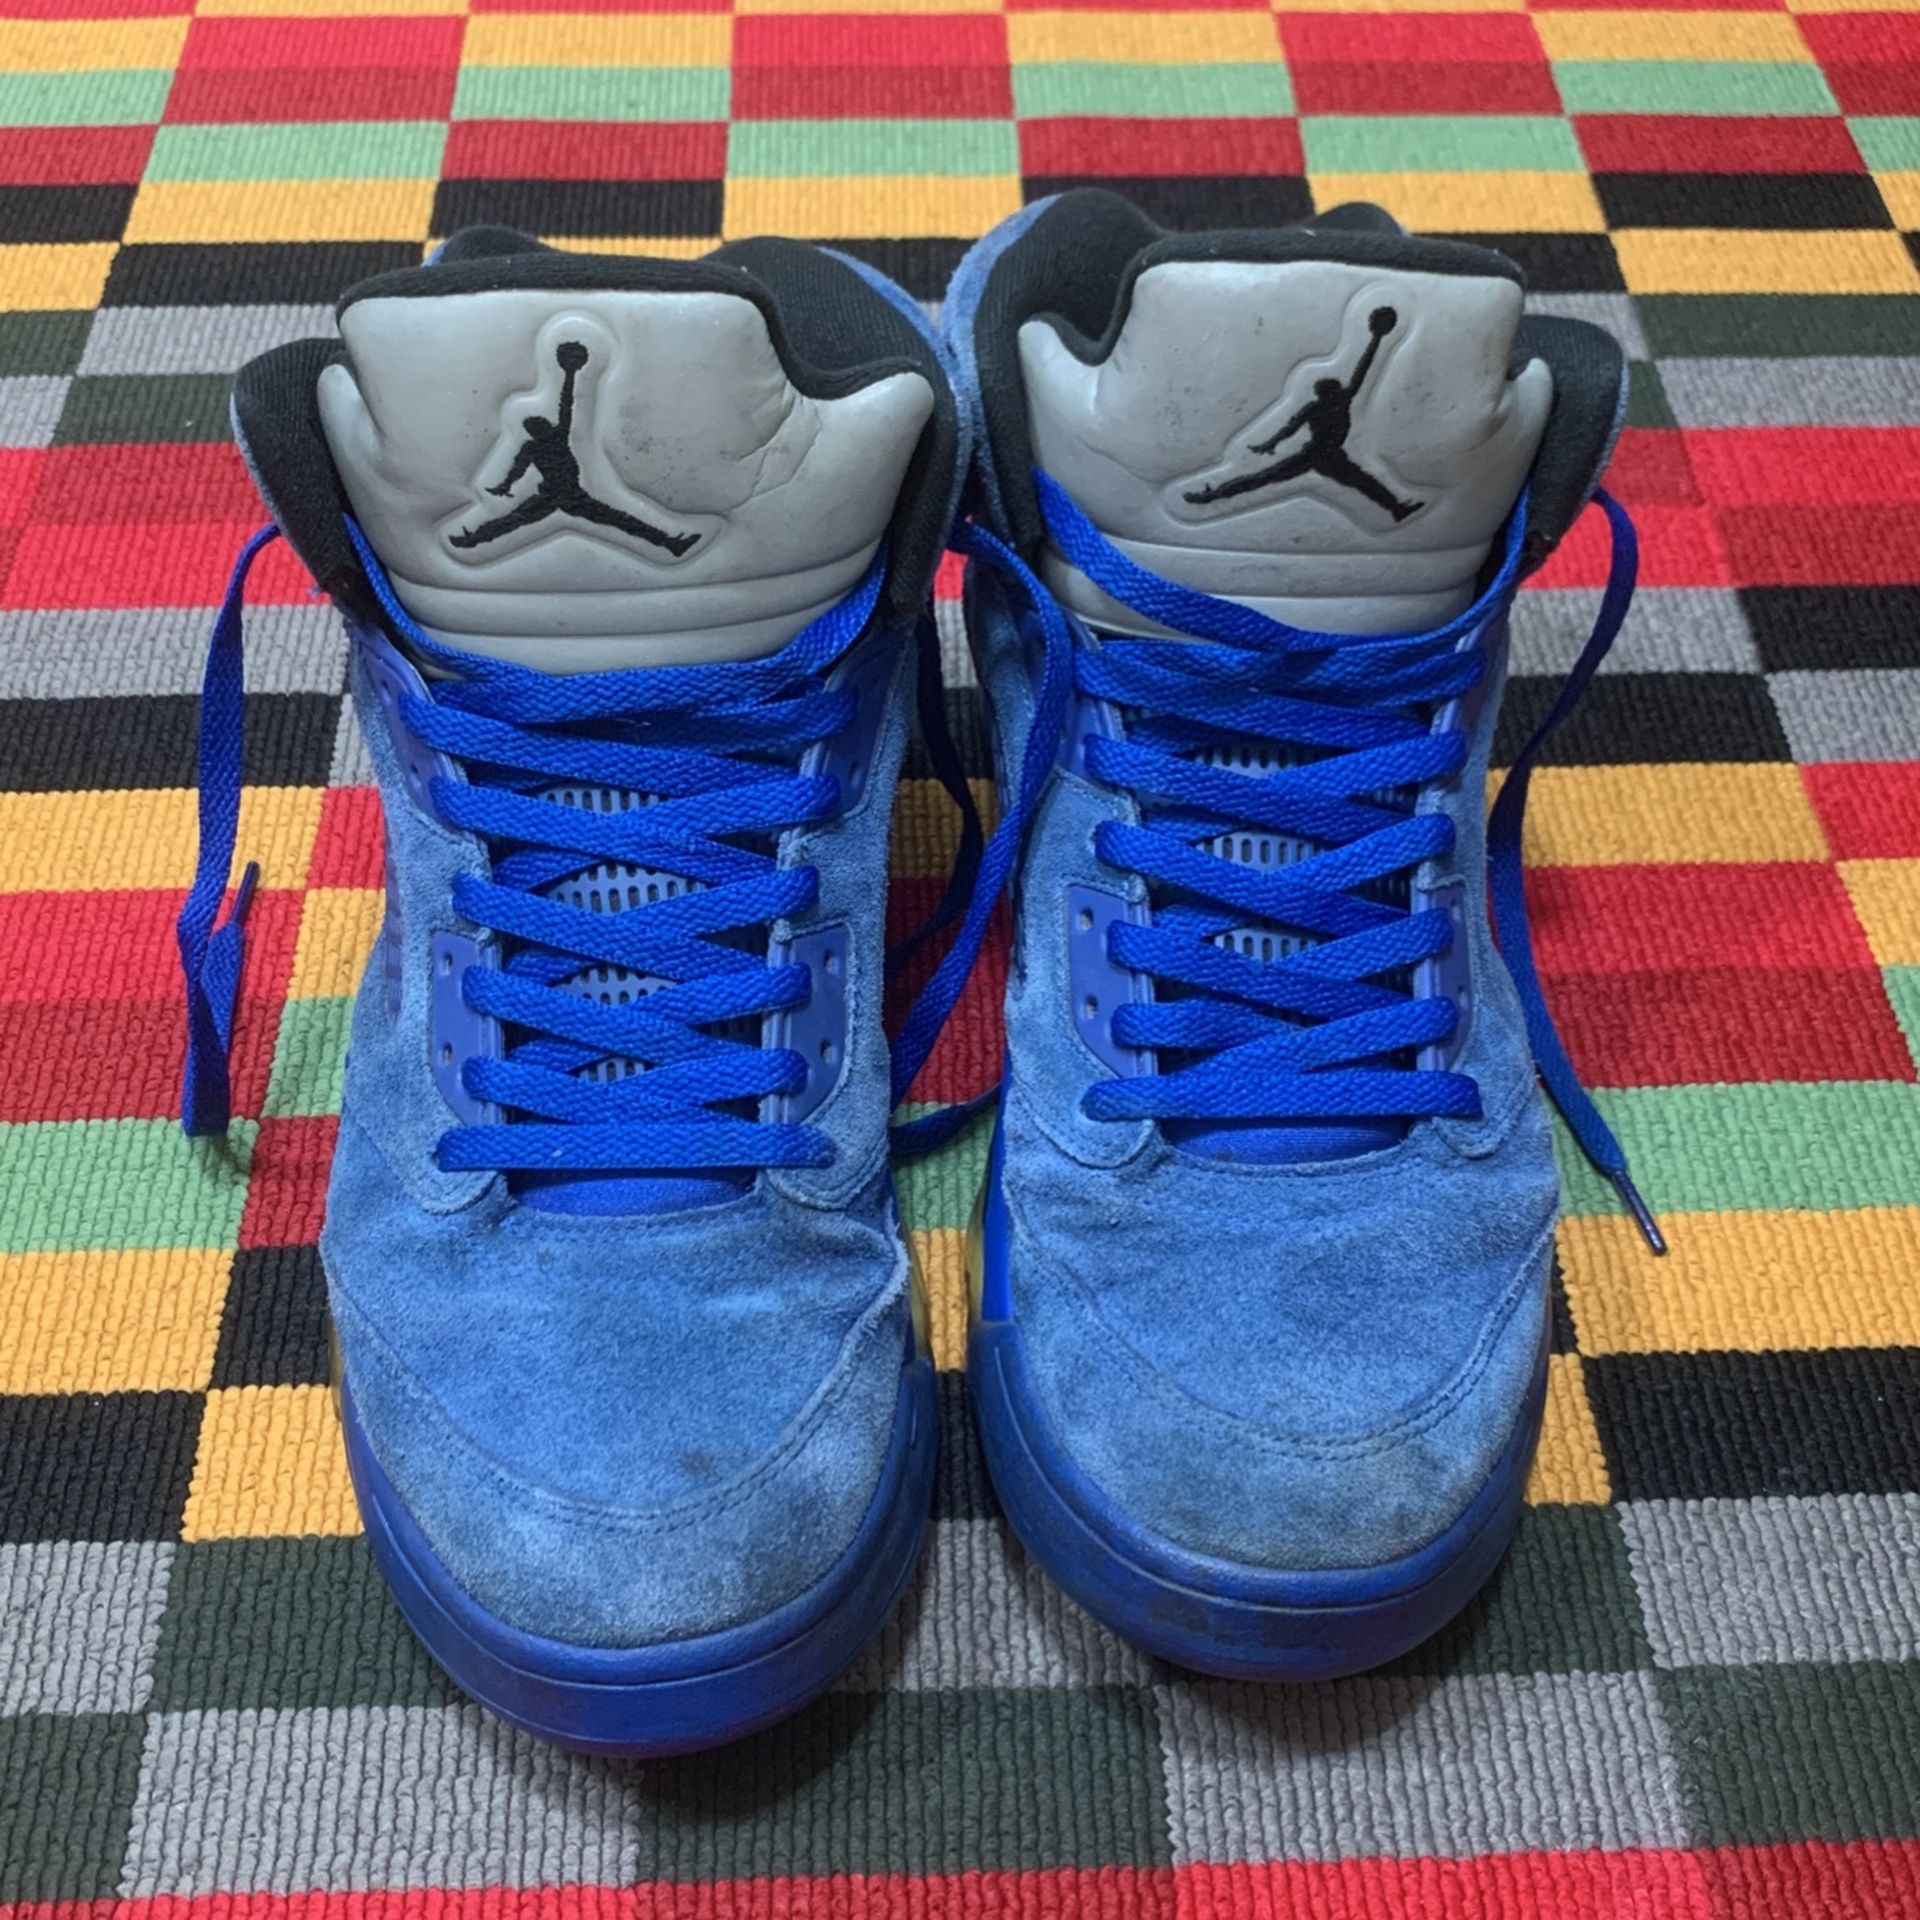 Jordan 5 blue suade 